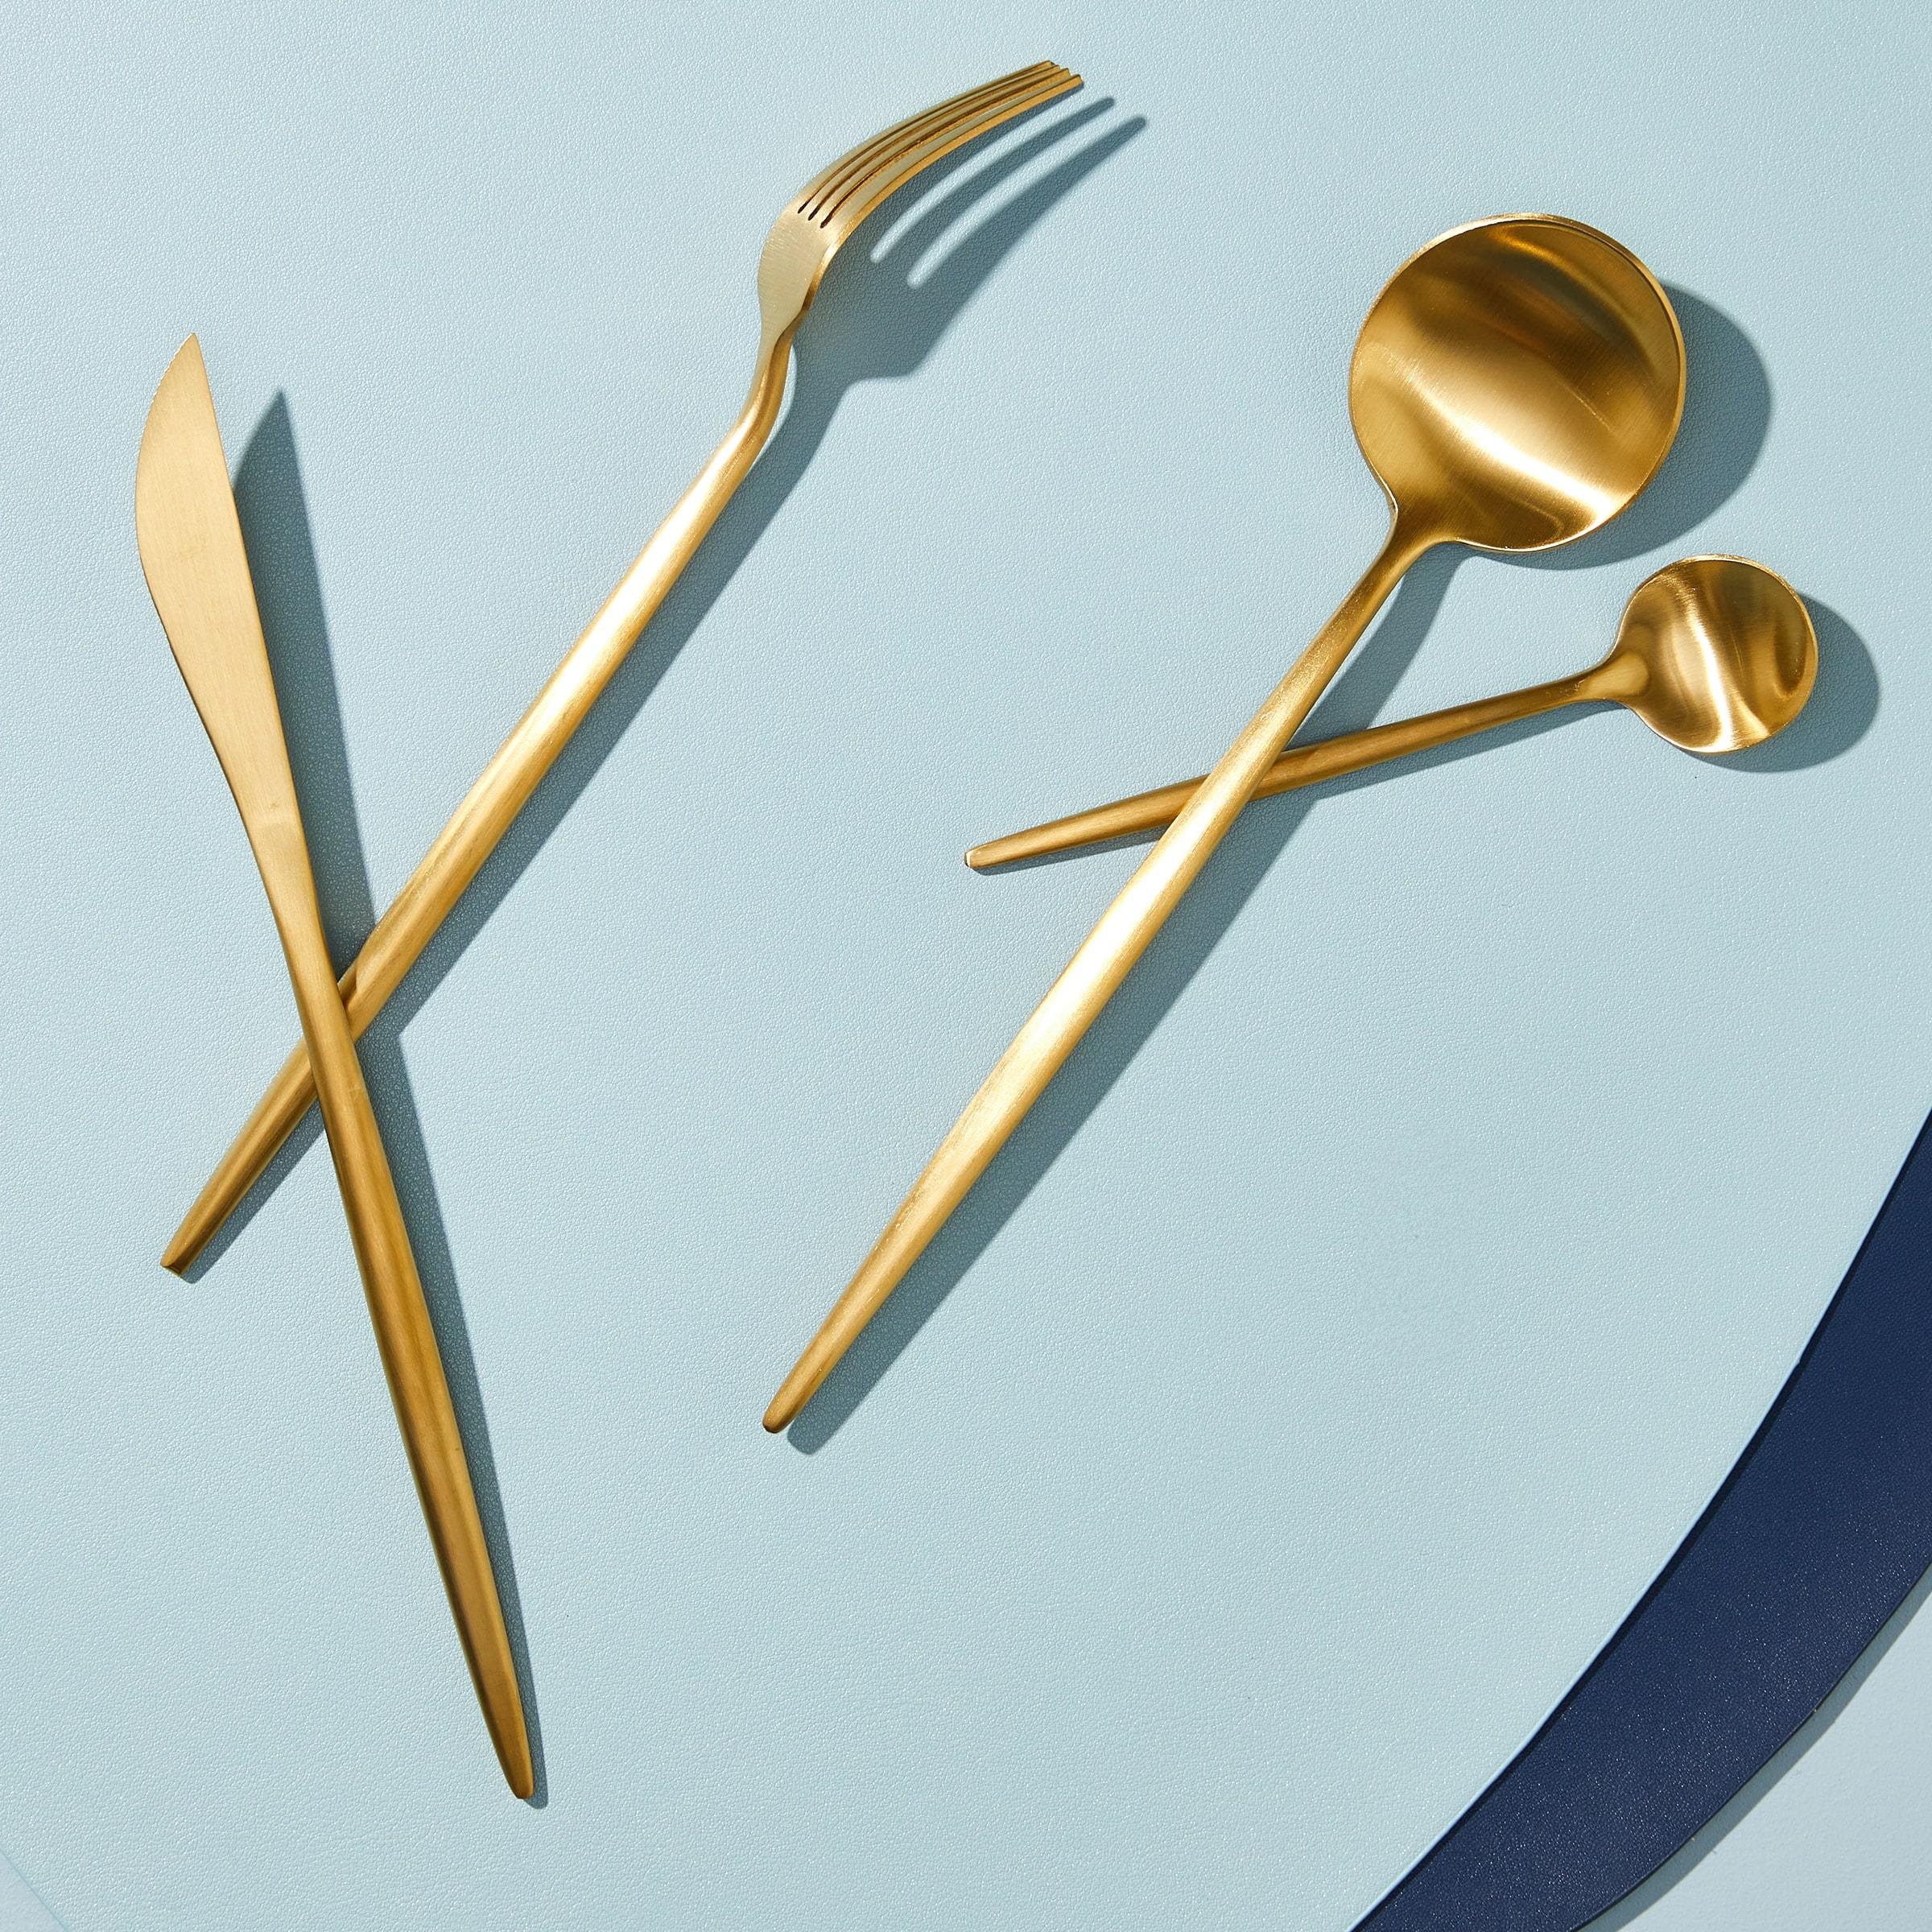 Peru Cutlery Set - Gold - Buy Flatware Sets Online at FRANKY'S